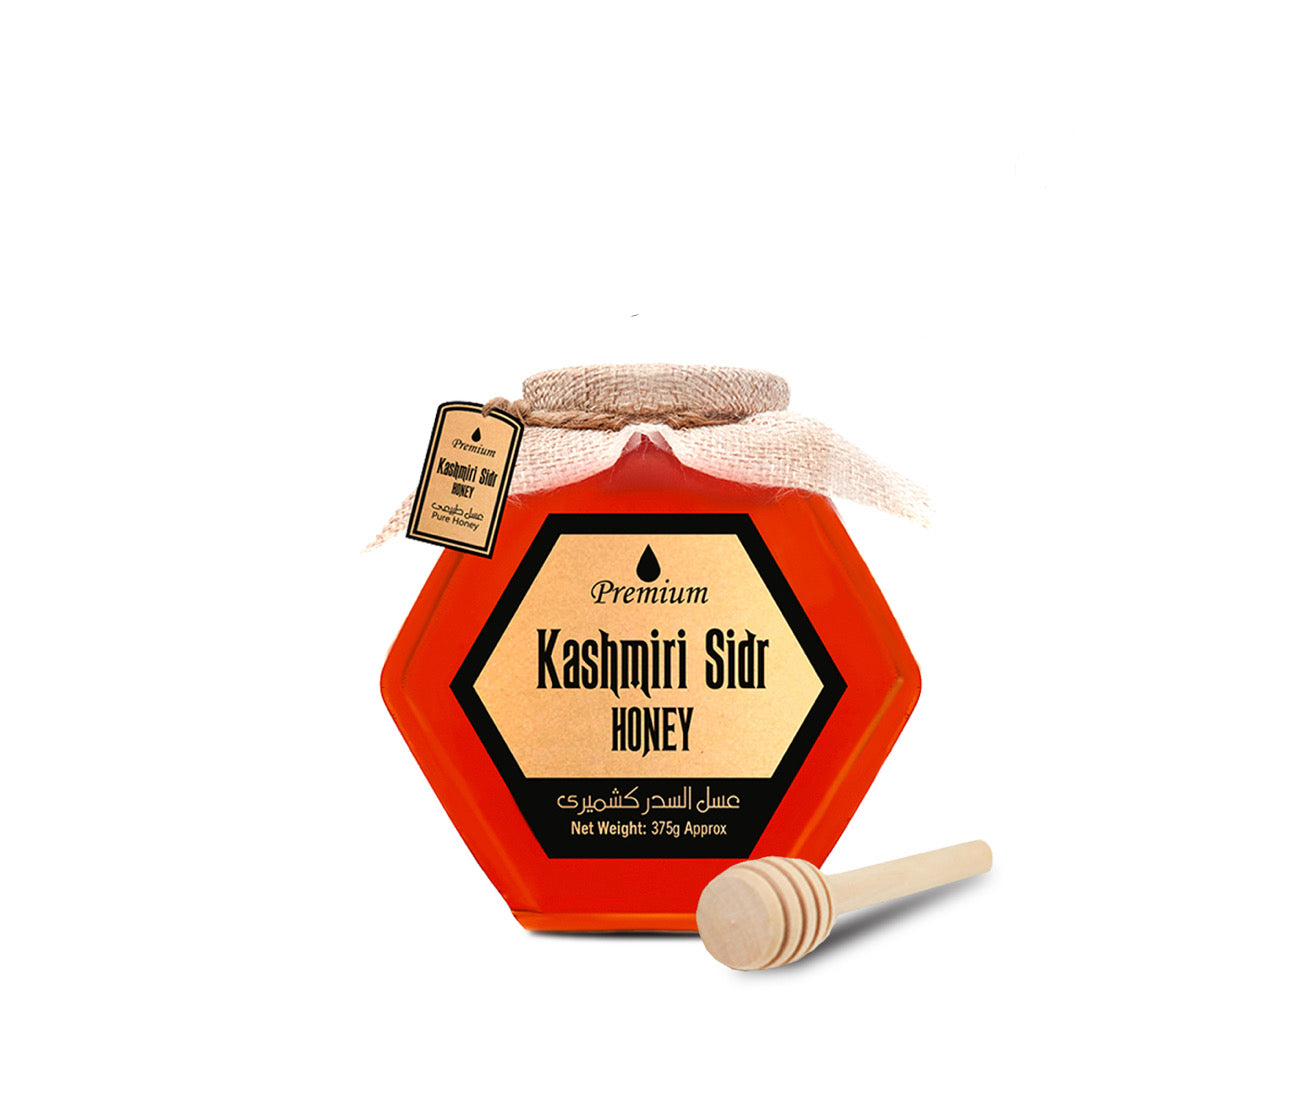 Kashmiri sidr honey